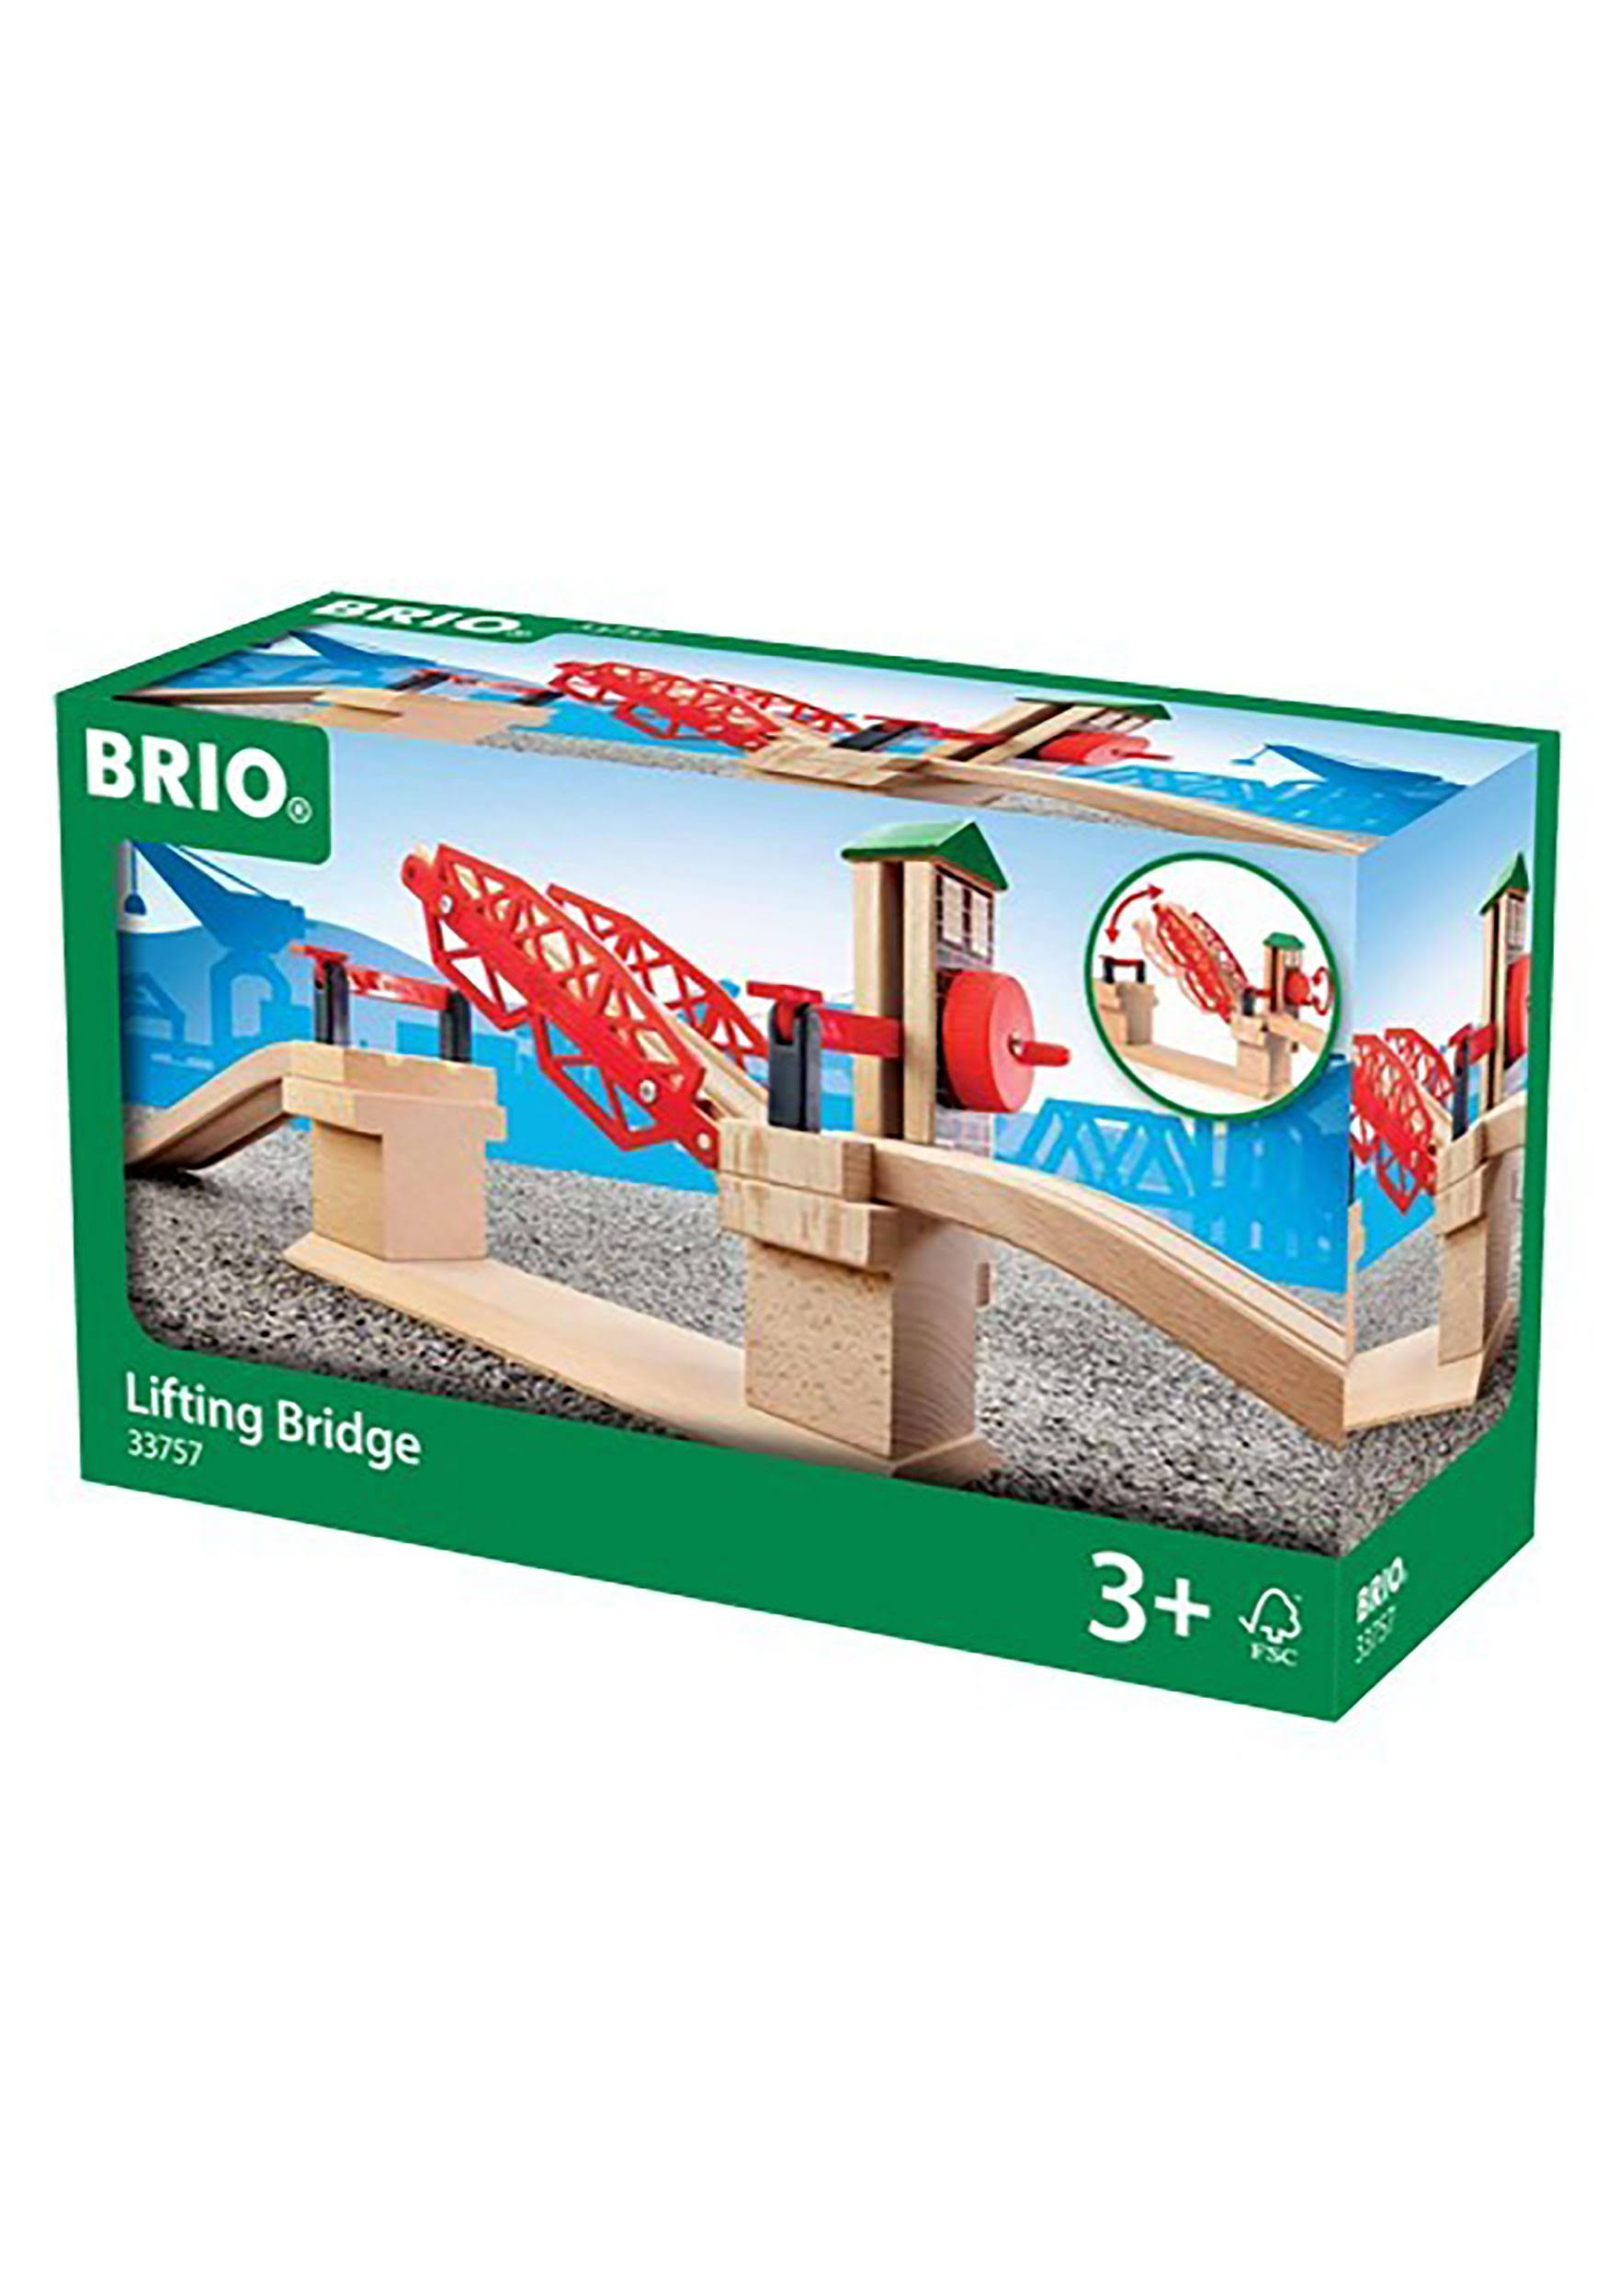 Brio Lifting Bridge Playset